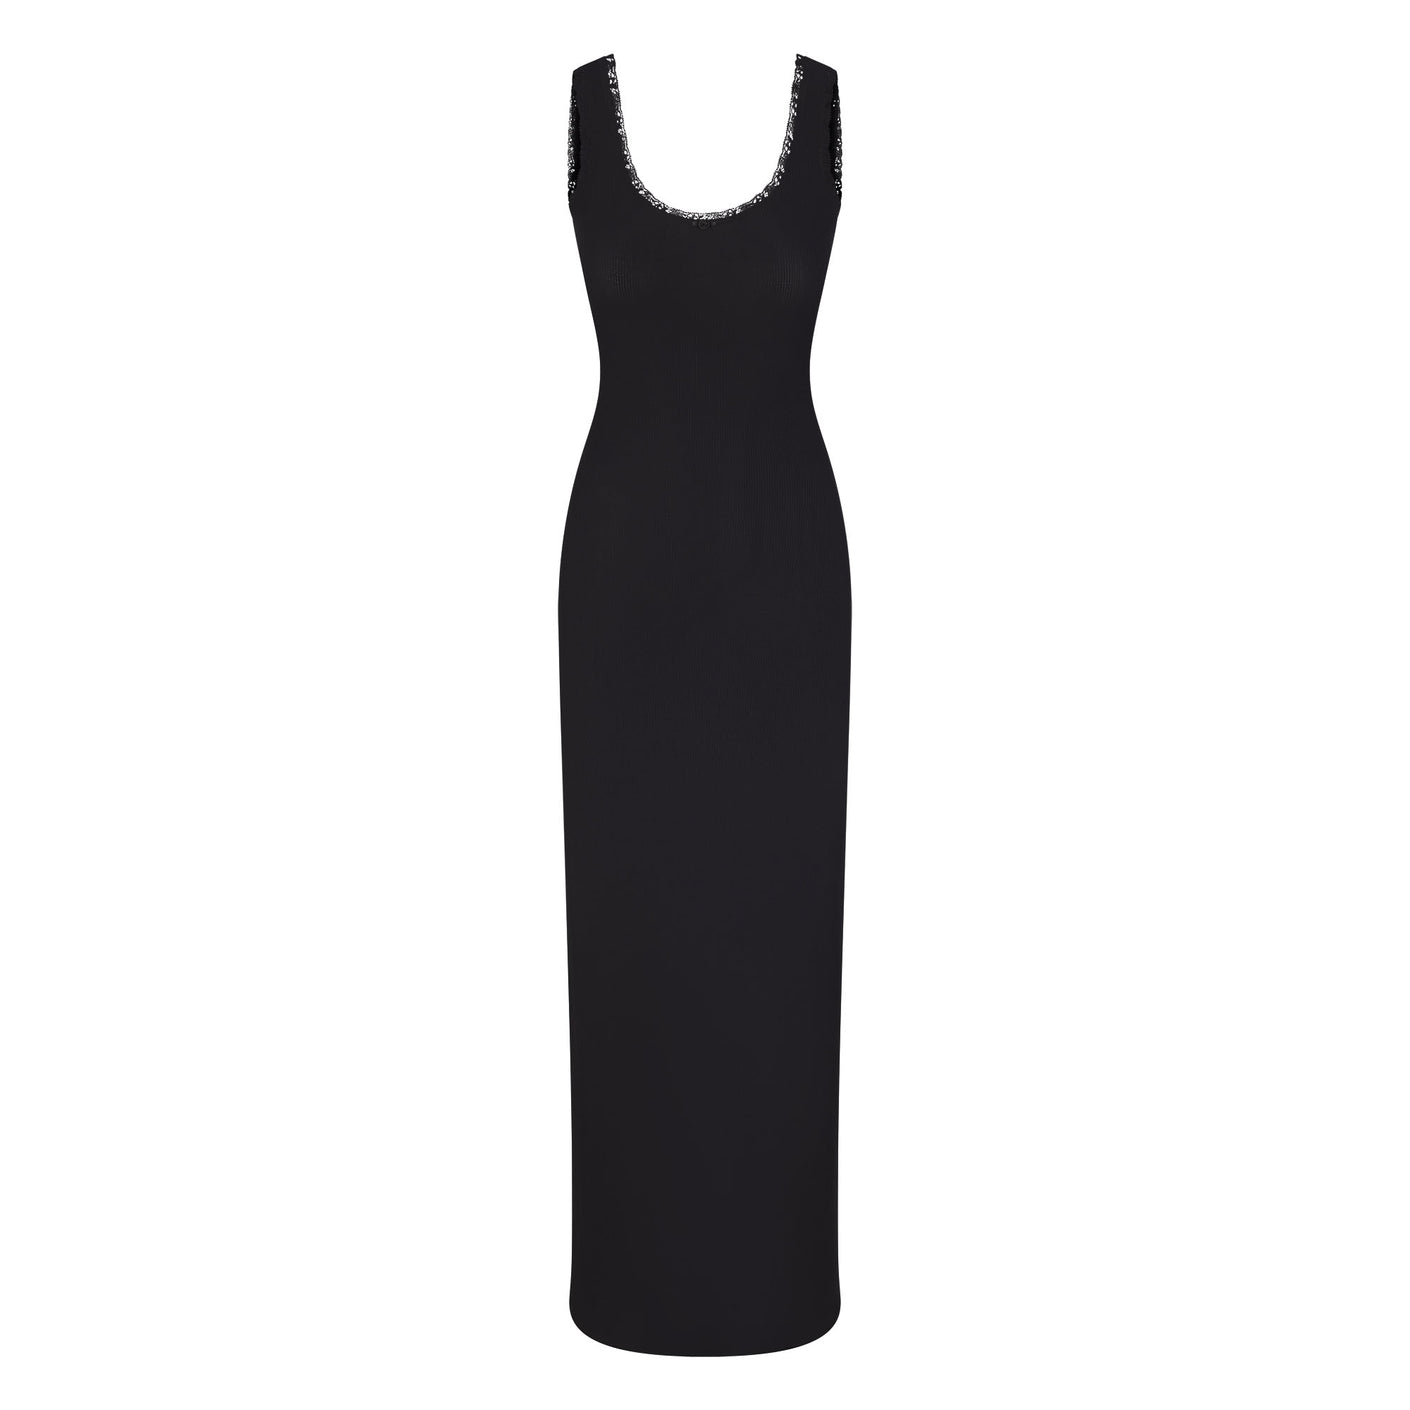 Black Soft Lounge Backless Maxi Dress by SKIMS on Sale